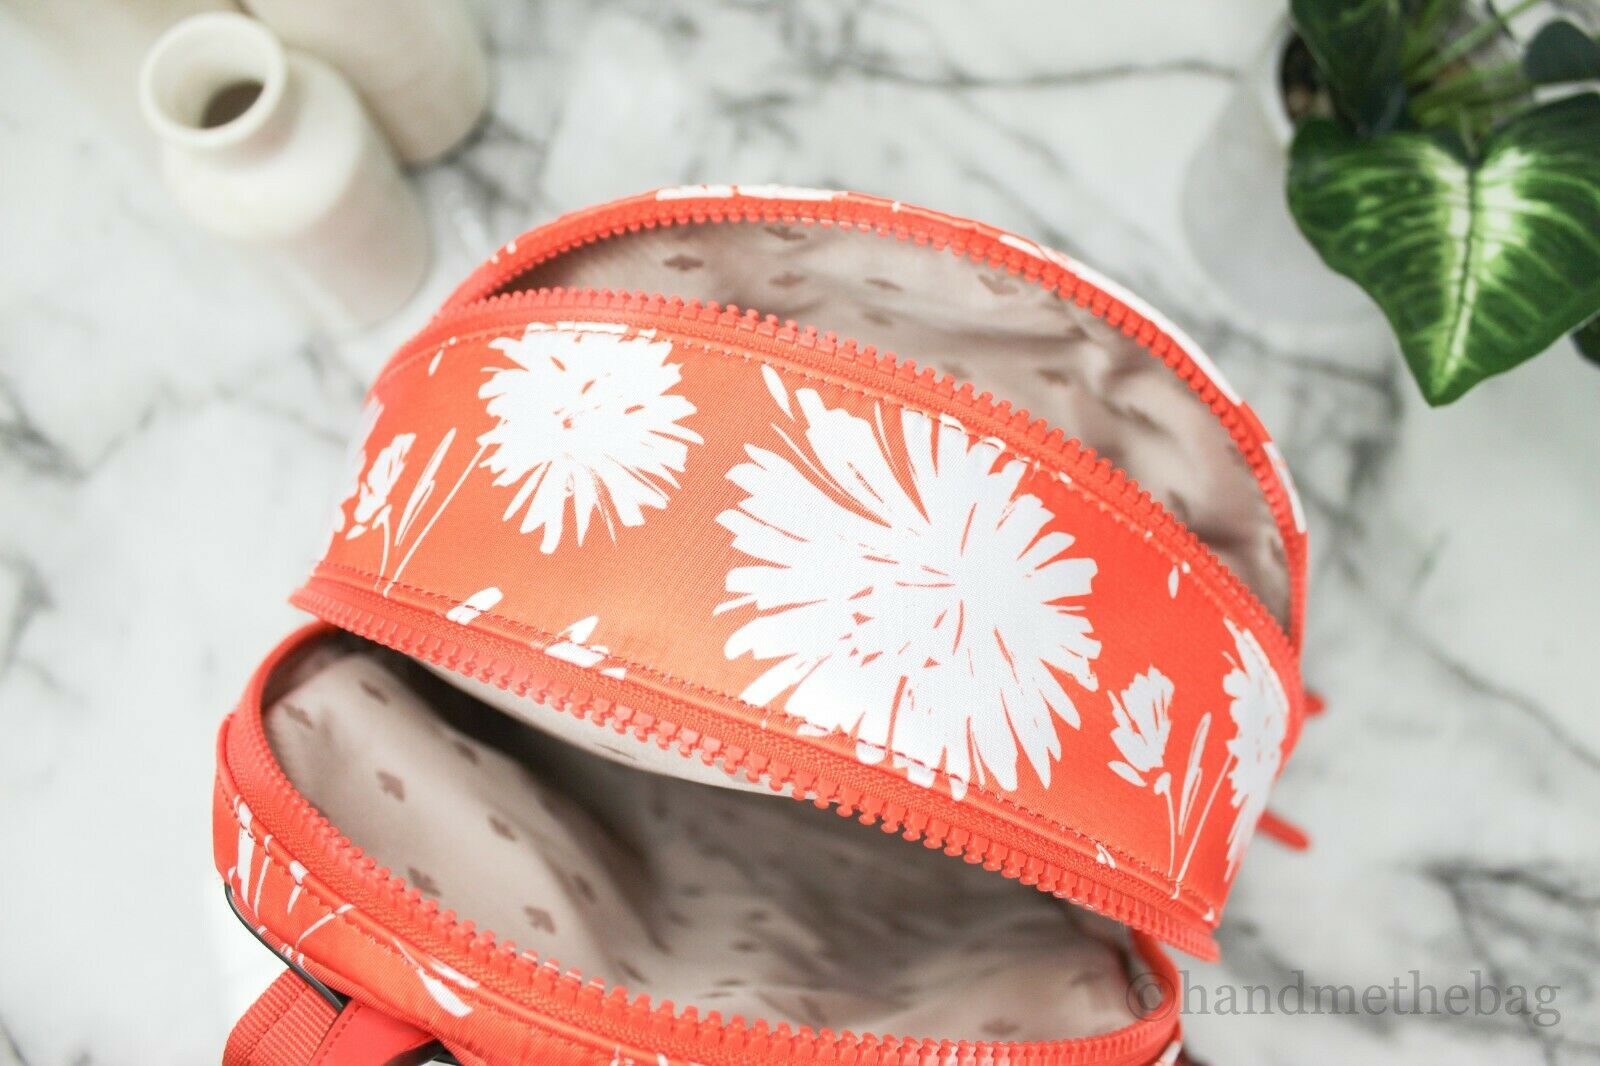 Kate Spade Karissa Wild Bloom Bright Orange Nylon Backpack